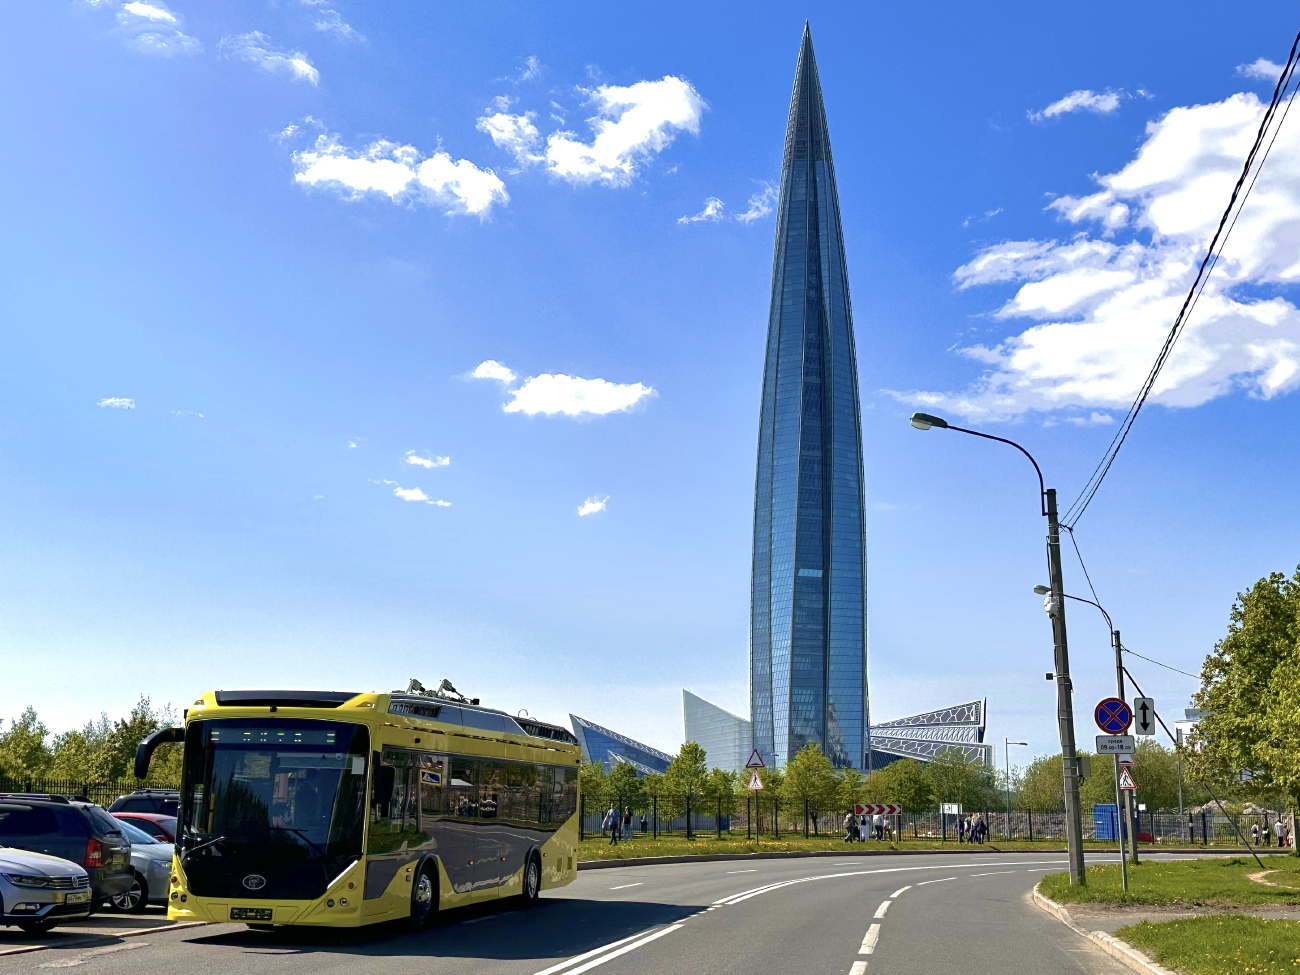 Engels, PKTS-62181 "General" № Б/н-1; სანქტ-პეტერბურგი — Running-in of the PKTS-62181 "General" electric bus in the city — 05/20/2023 — 05/21/2023